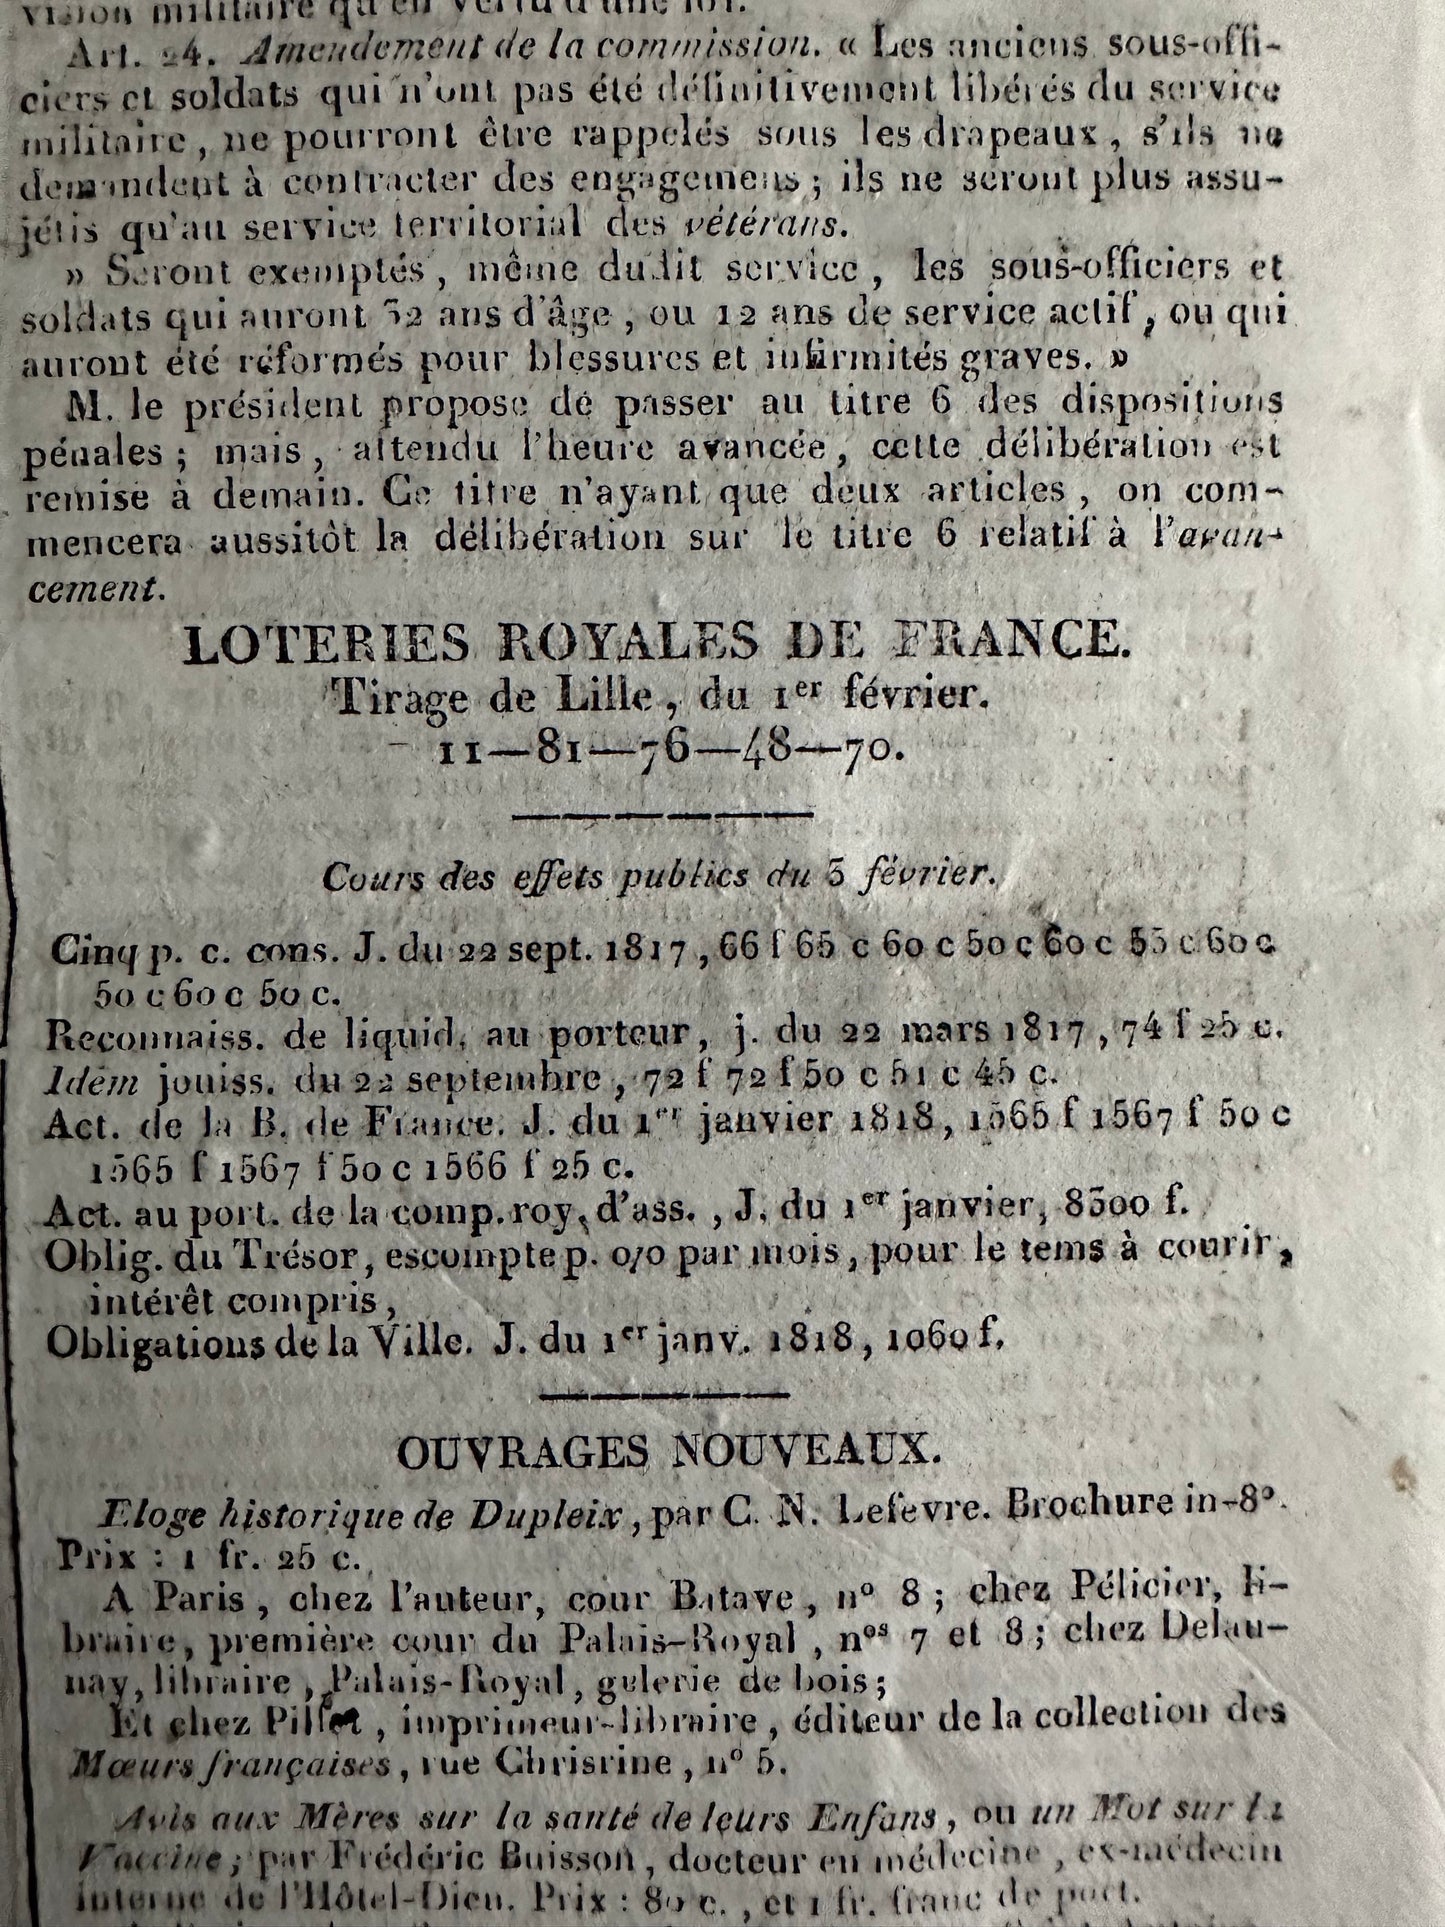 1818 Issue of Gazette de France